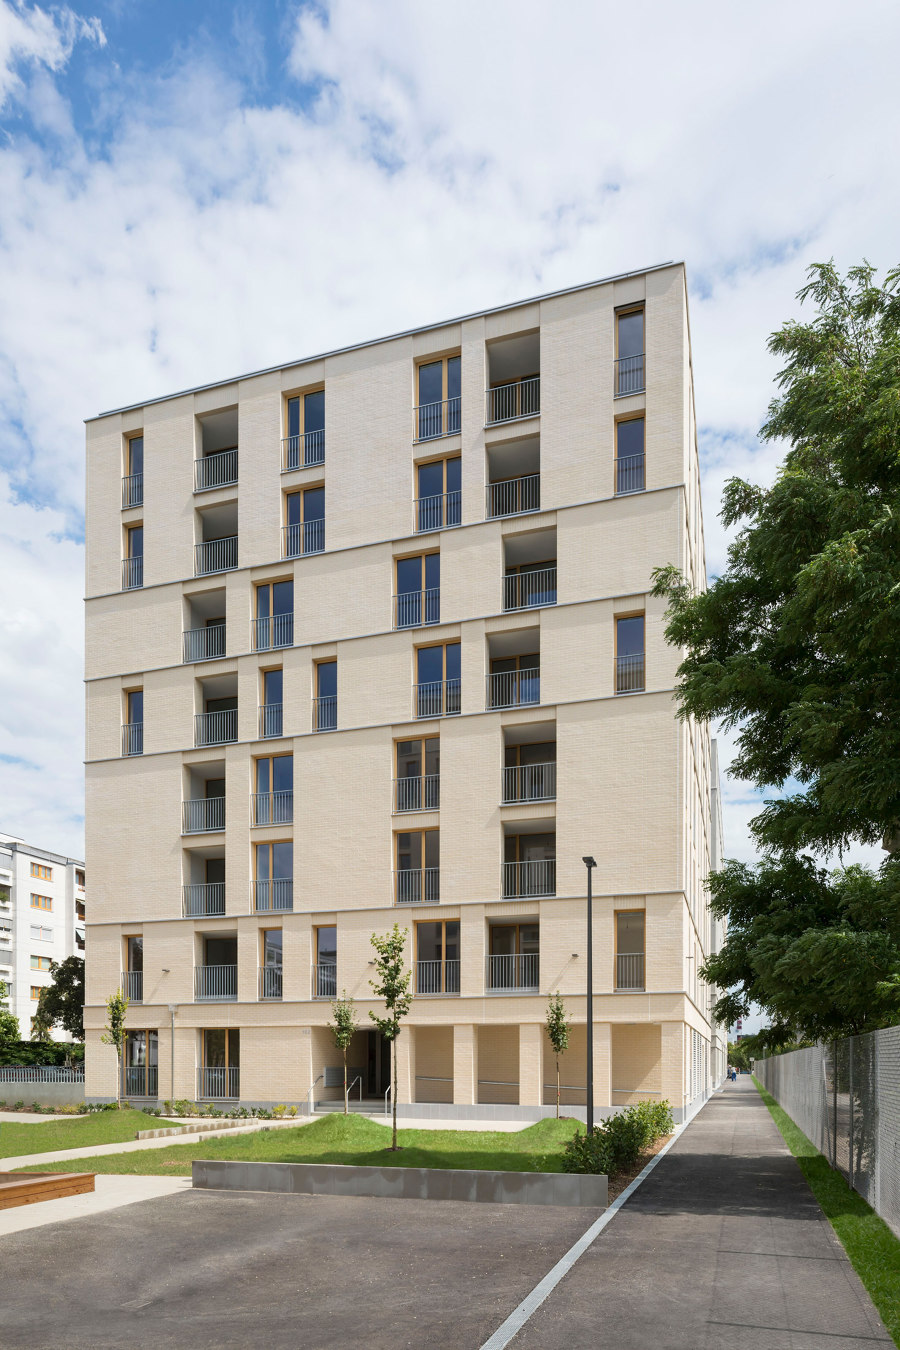 Residential Complex VORGARTENSTRASSE 98-106 di BEHF Architects | Case plurifamiliari